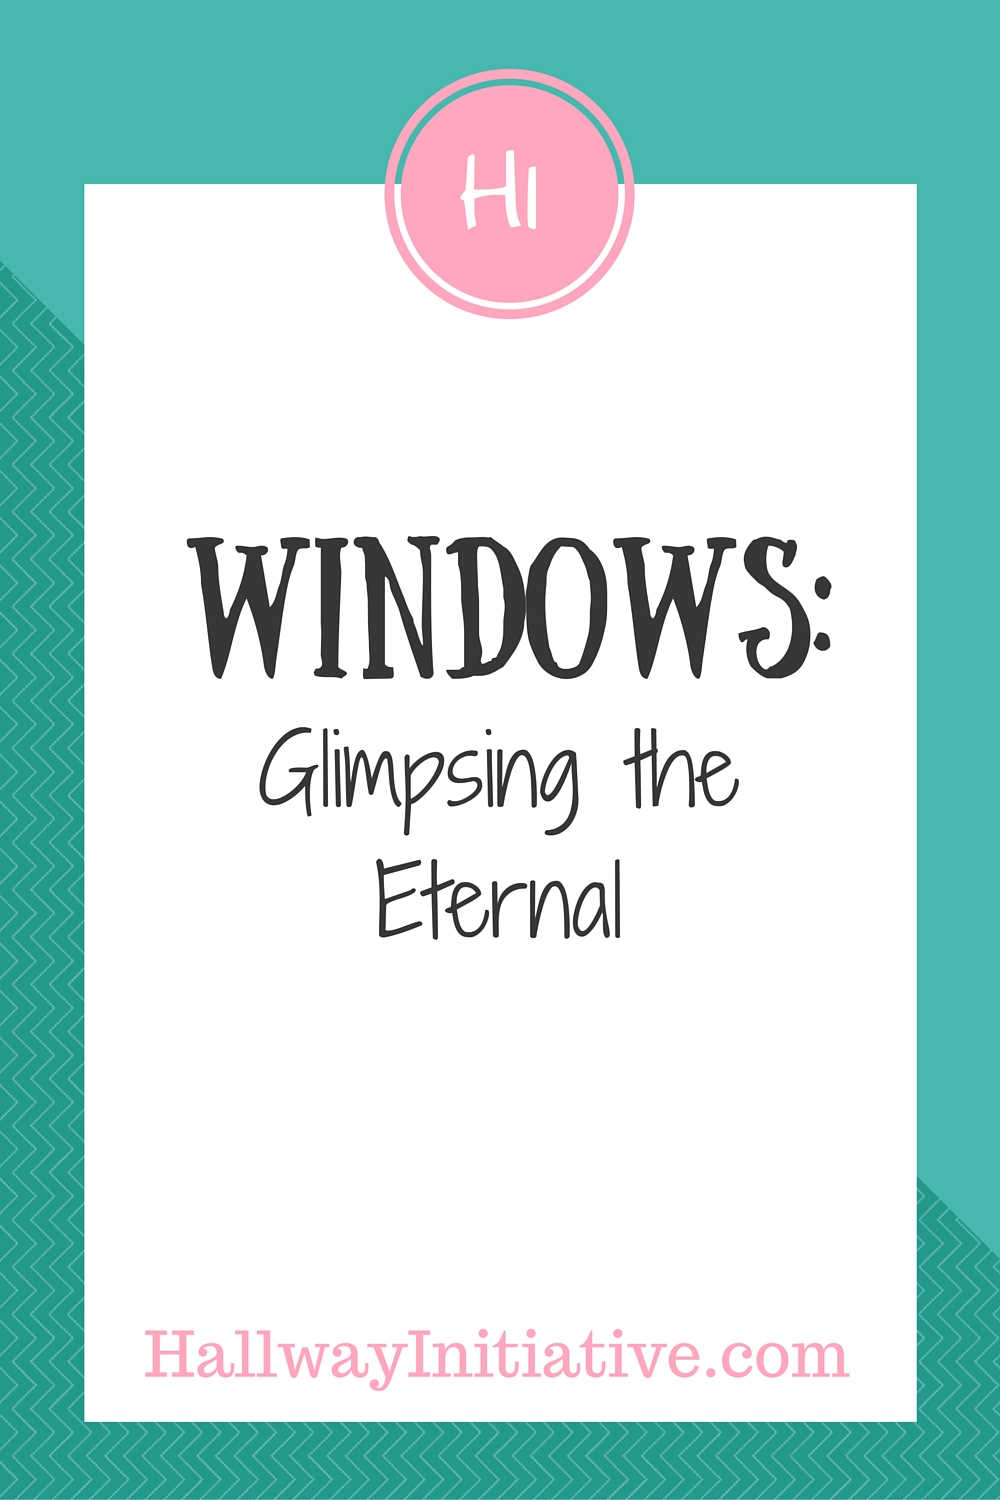 Windows: glimpsing the eternal